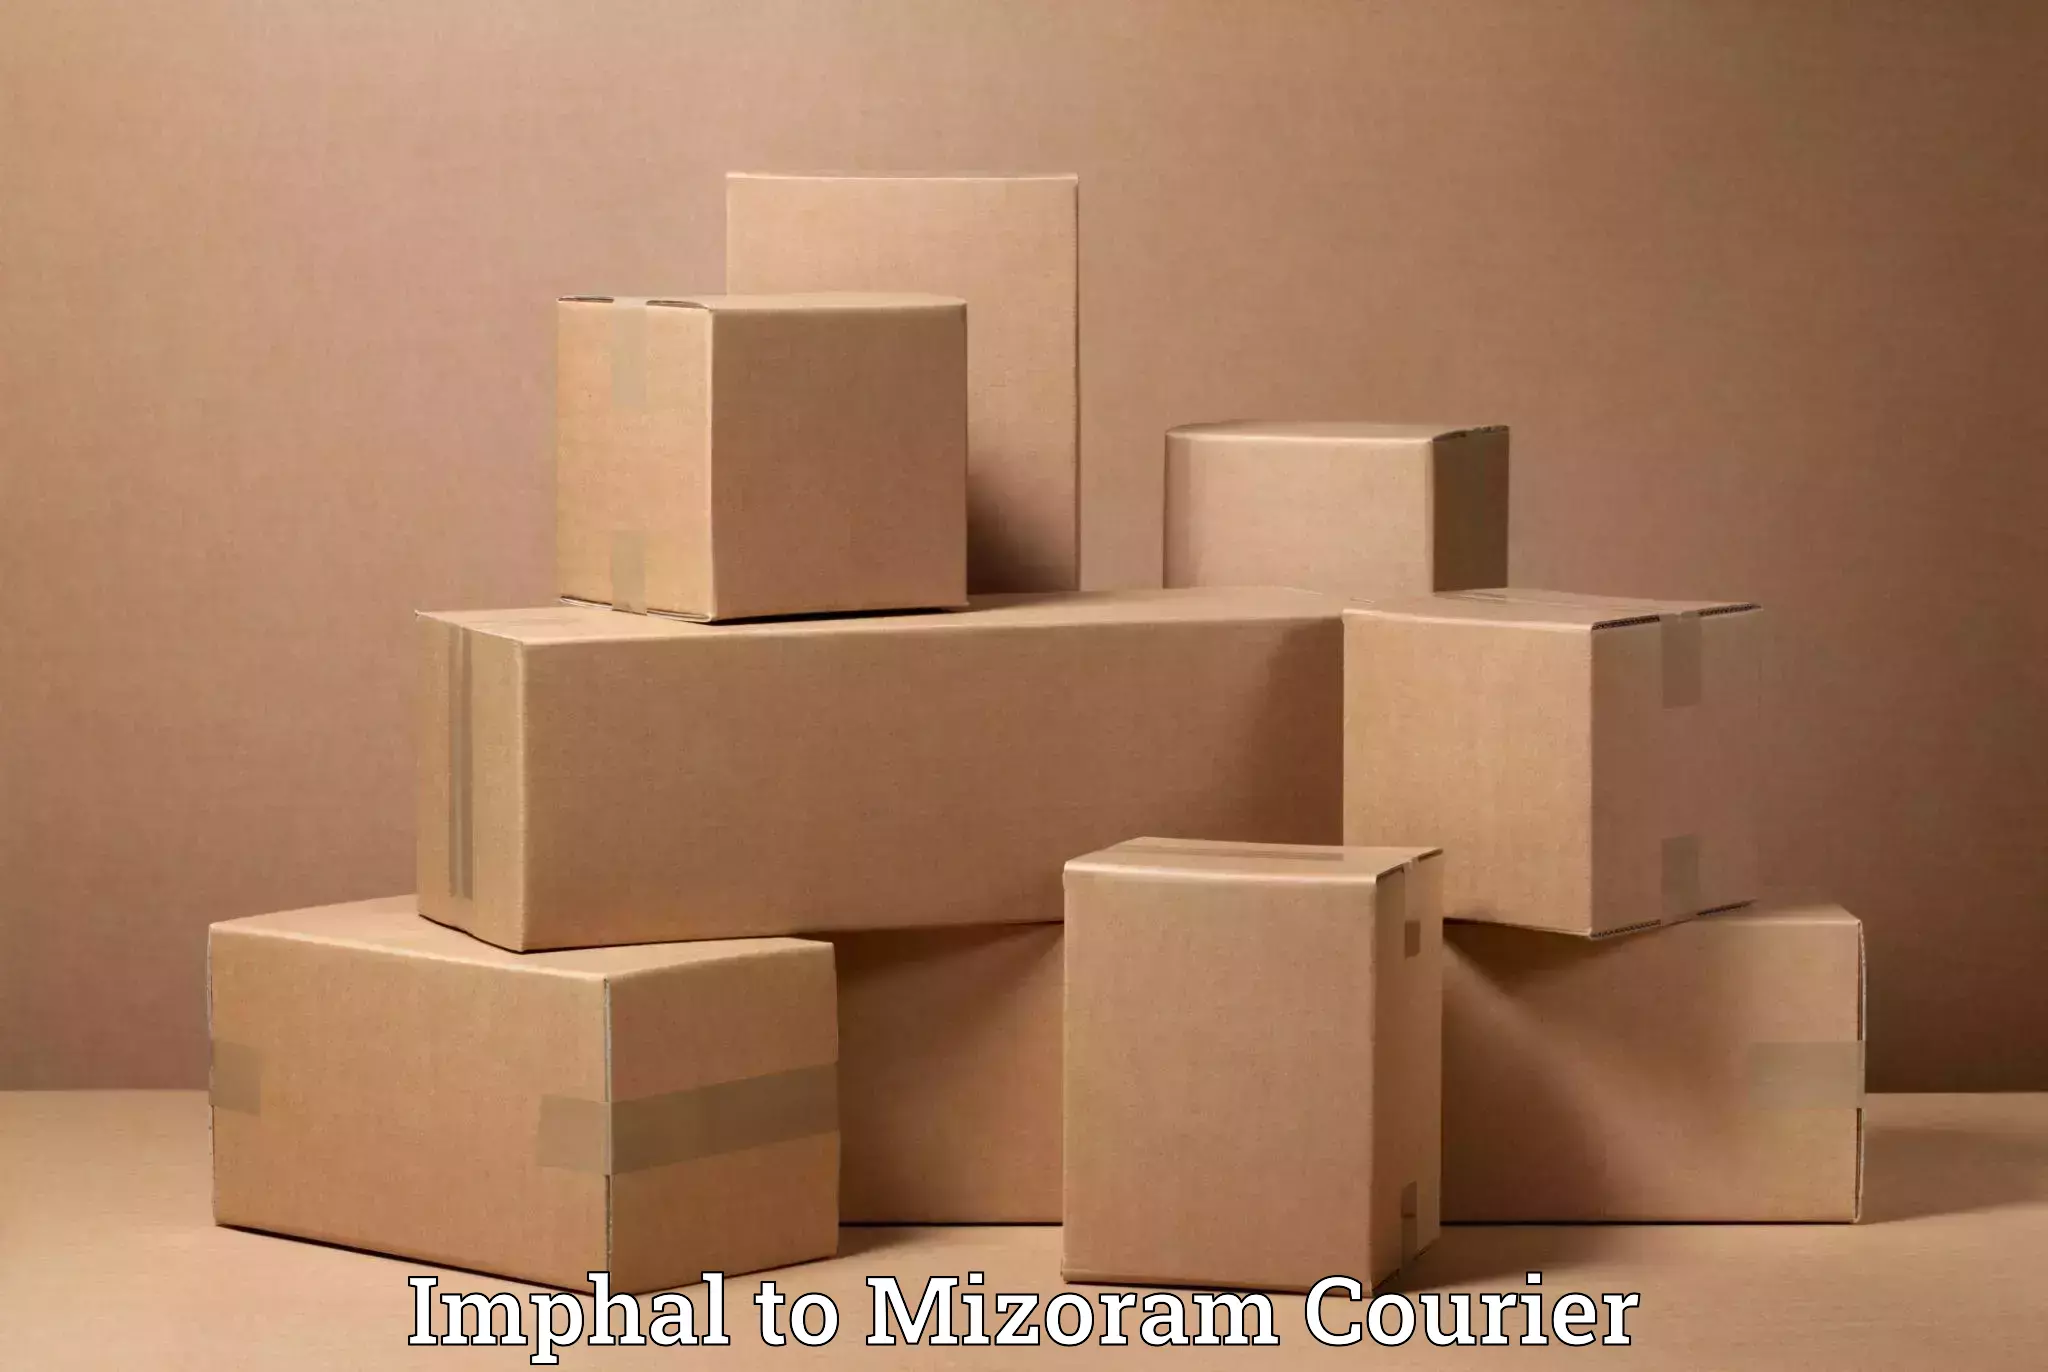 Professional moving company Imphal to Mizoram